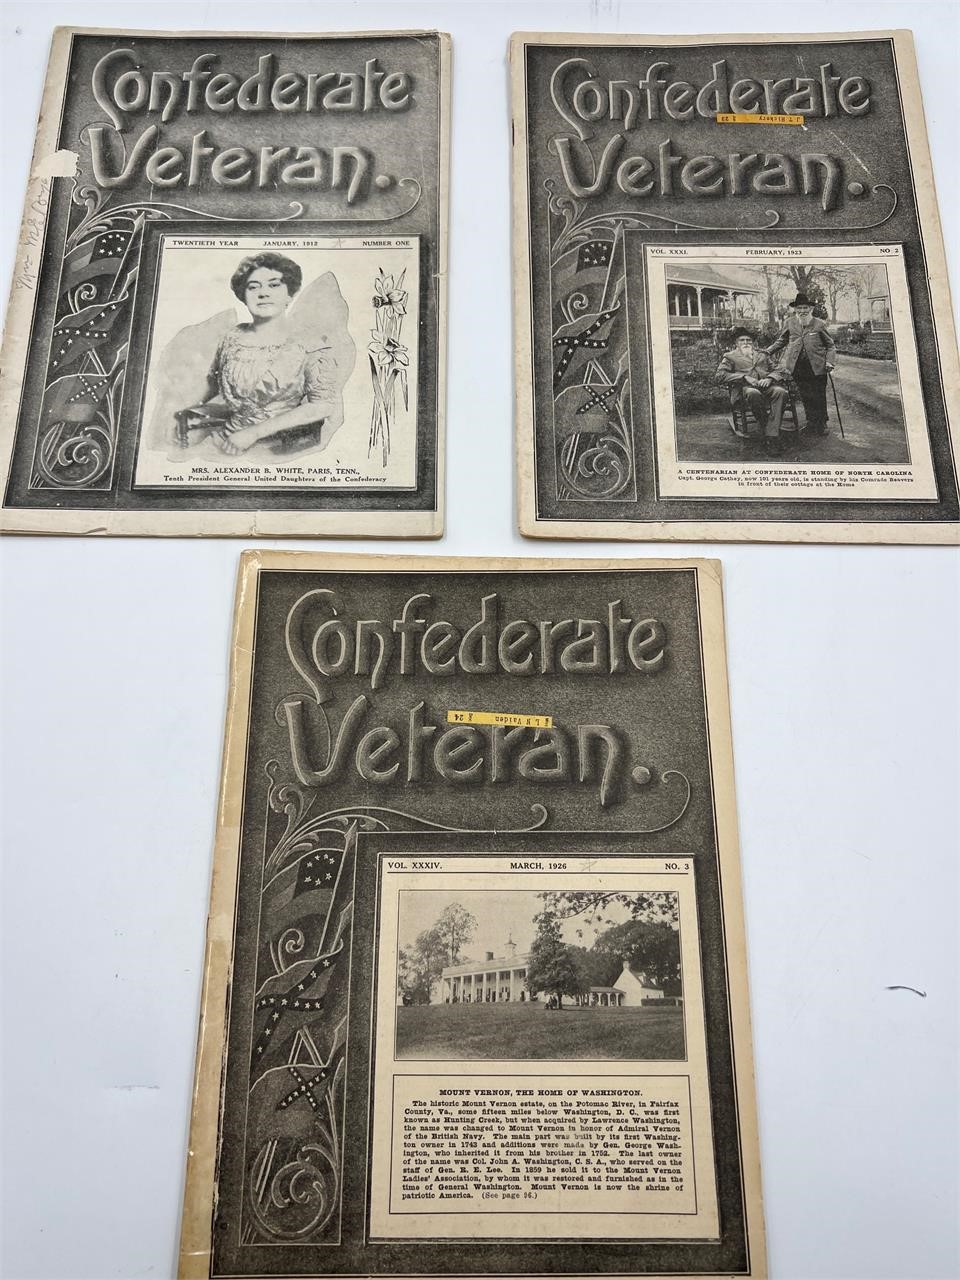 Vintage Confederate Veteran issues